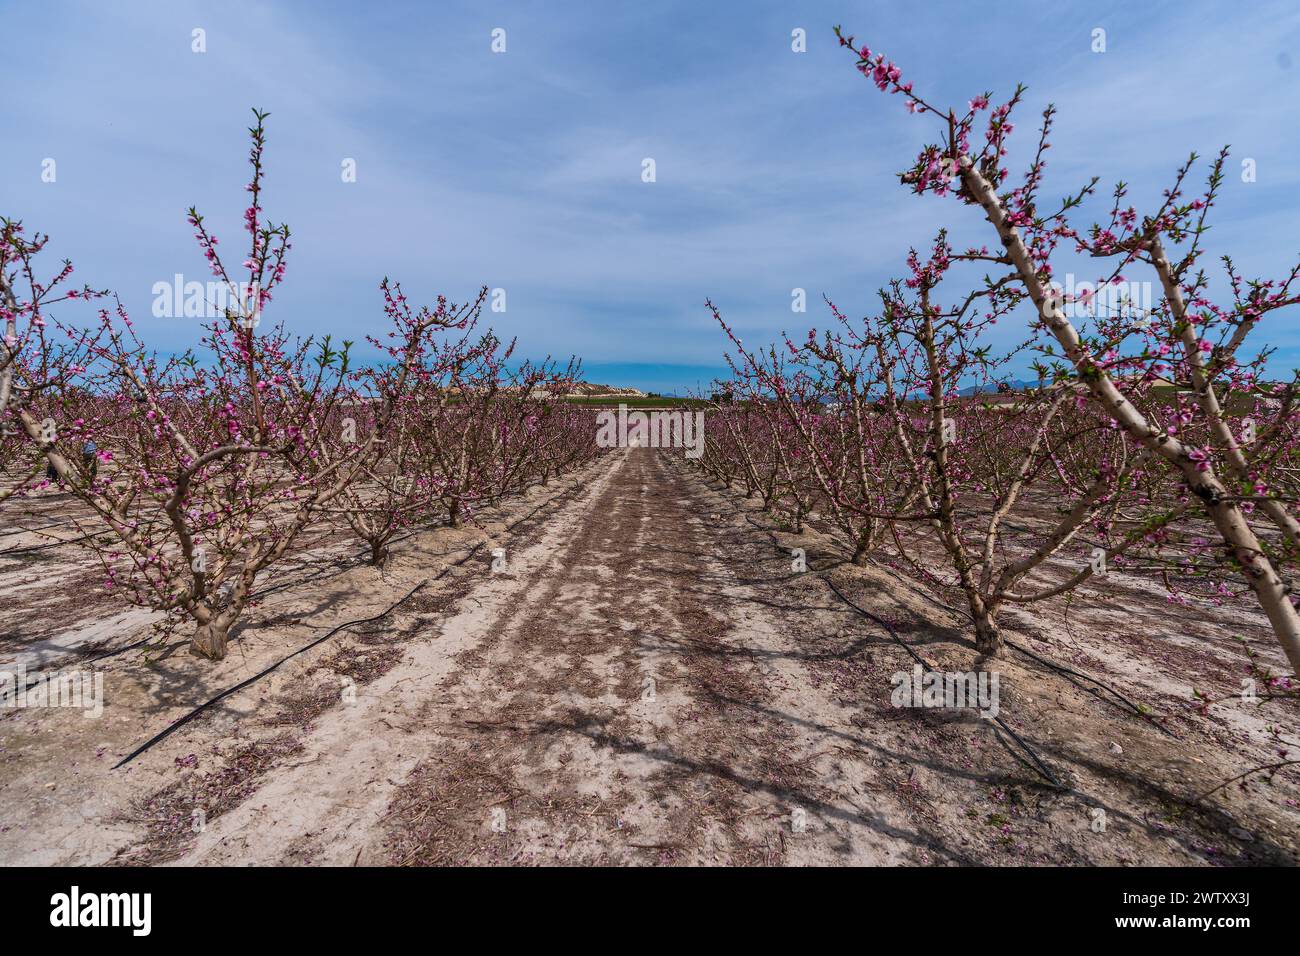 Peach trees blooming in sandy desert landscape Stock Photo